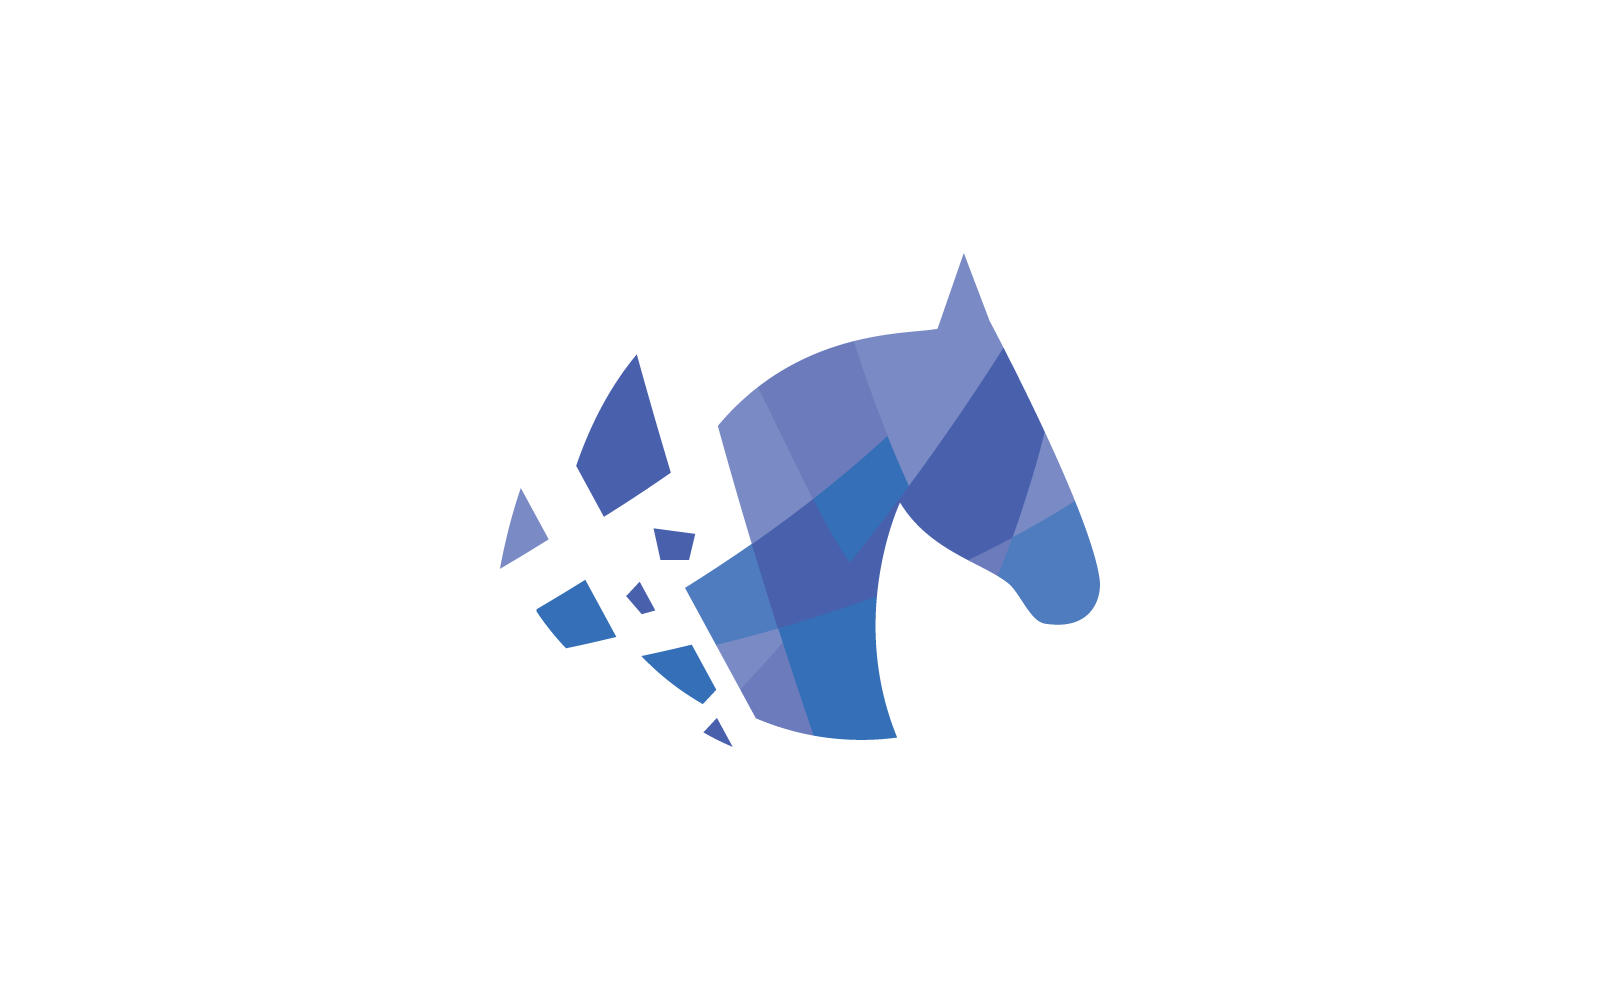 Horse pixel style logo design